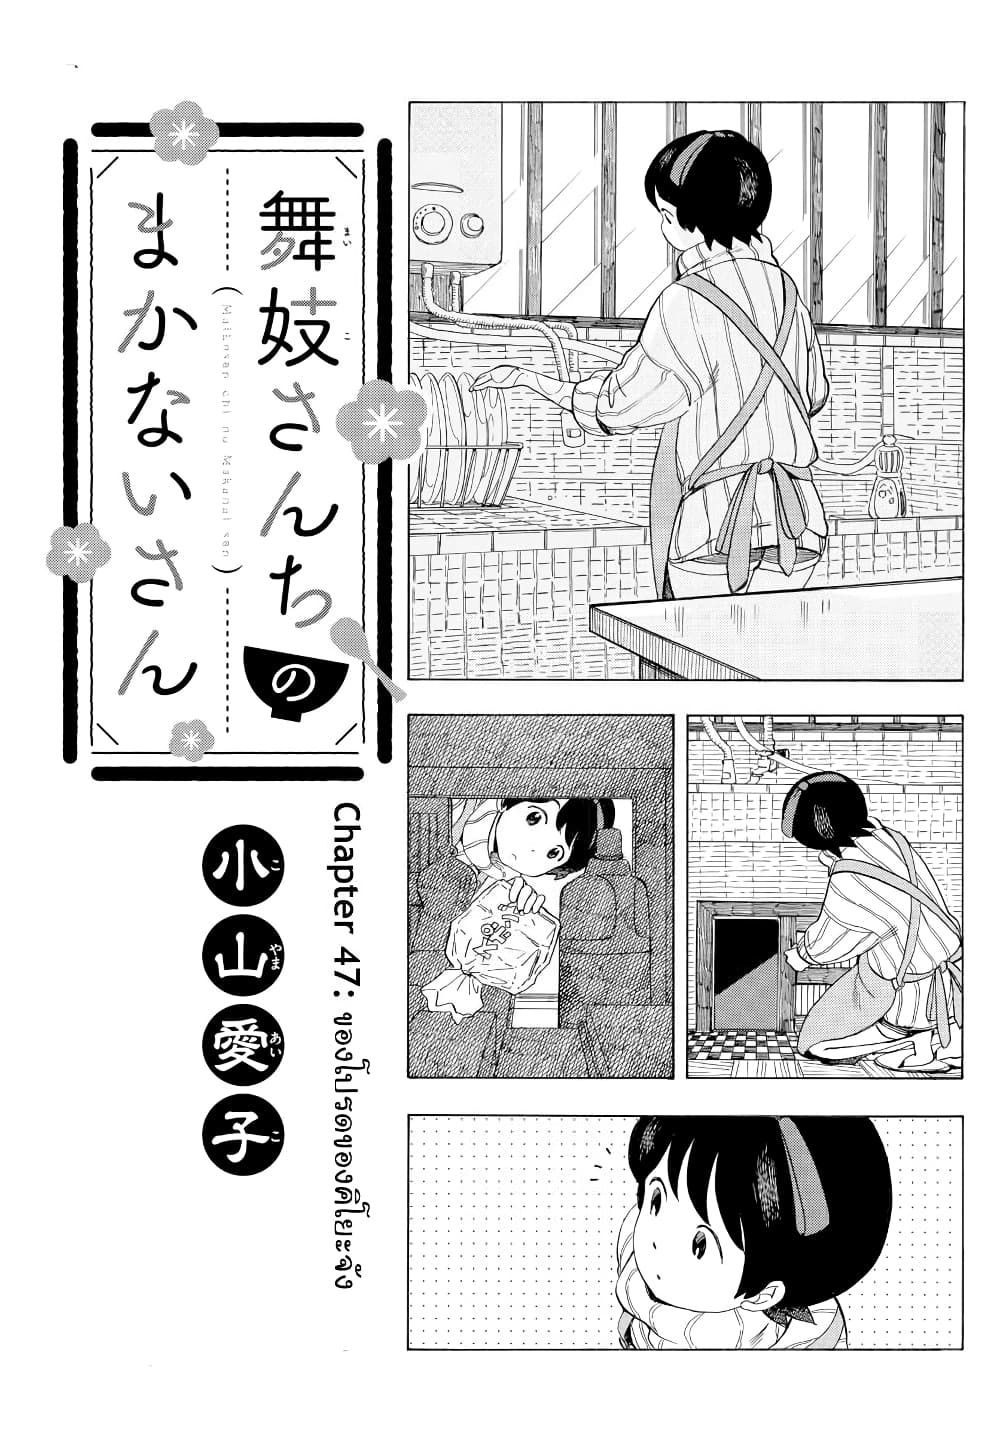 Maiko-san Chi no Makanai-san 47-ของโปรดของคิโยะจัง